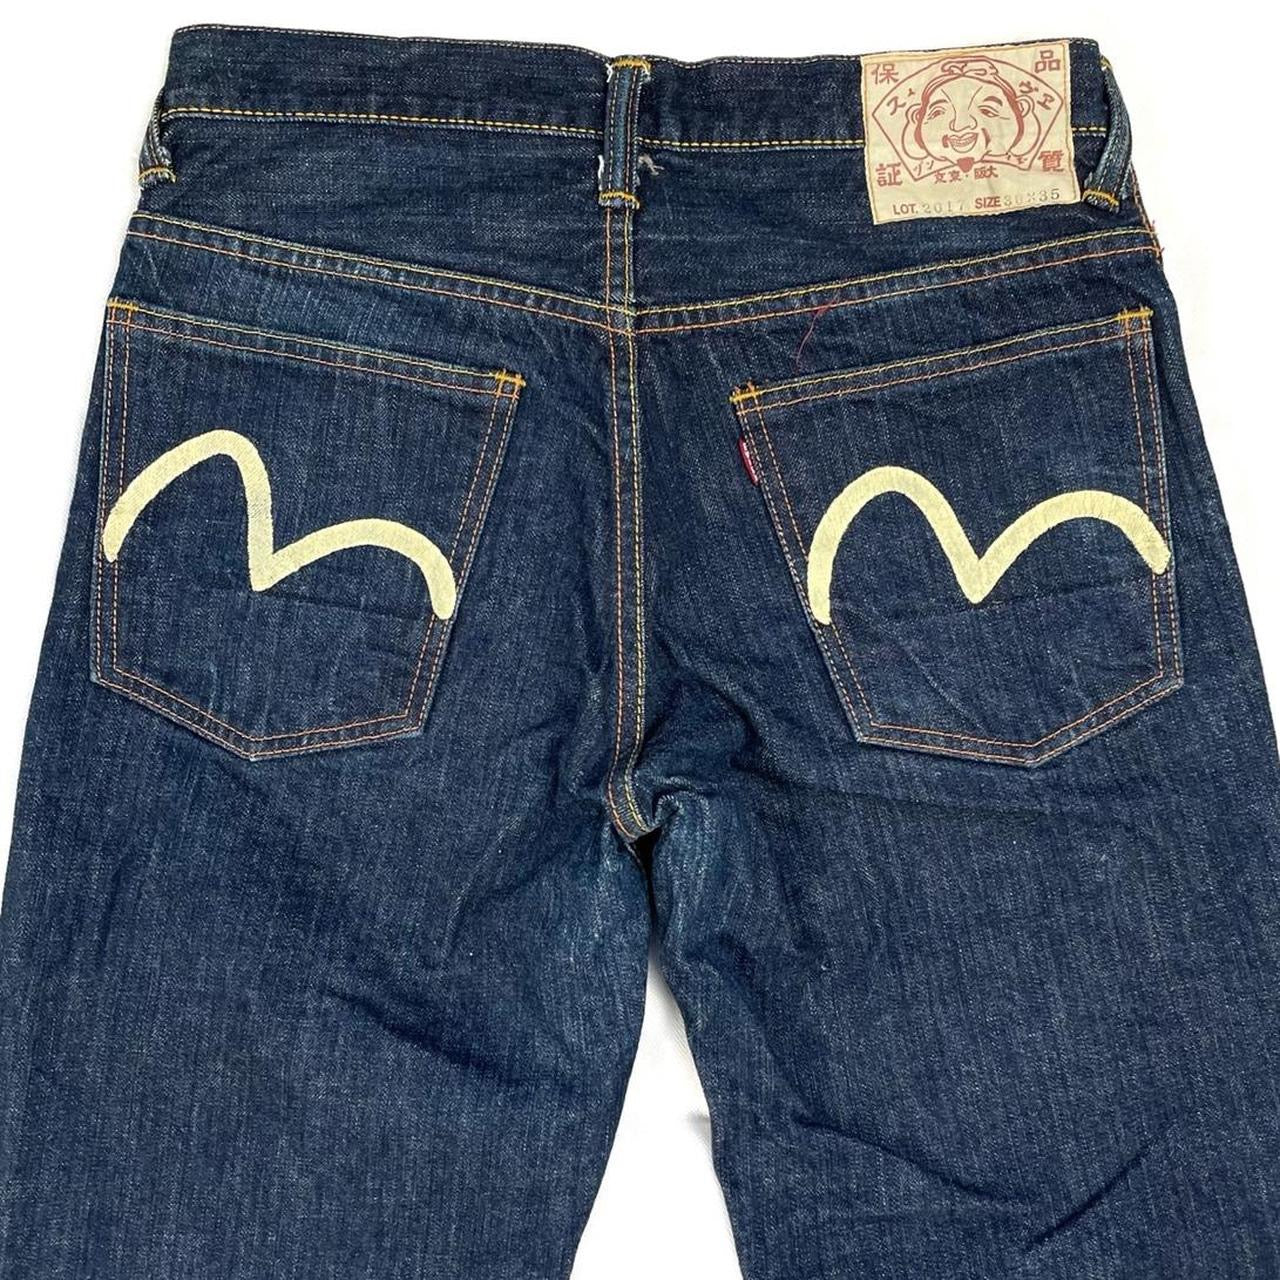 Evisu Selvedge Jeans With Double White Daicocks ( W30 )